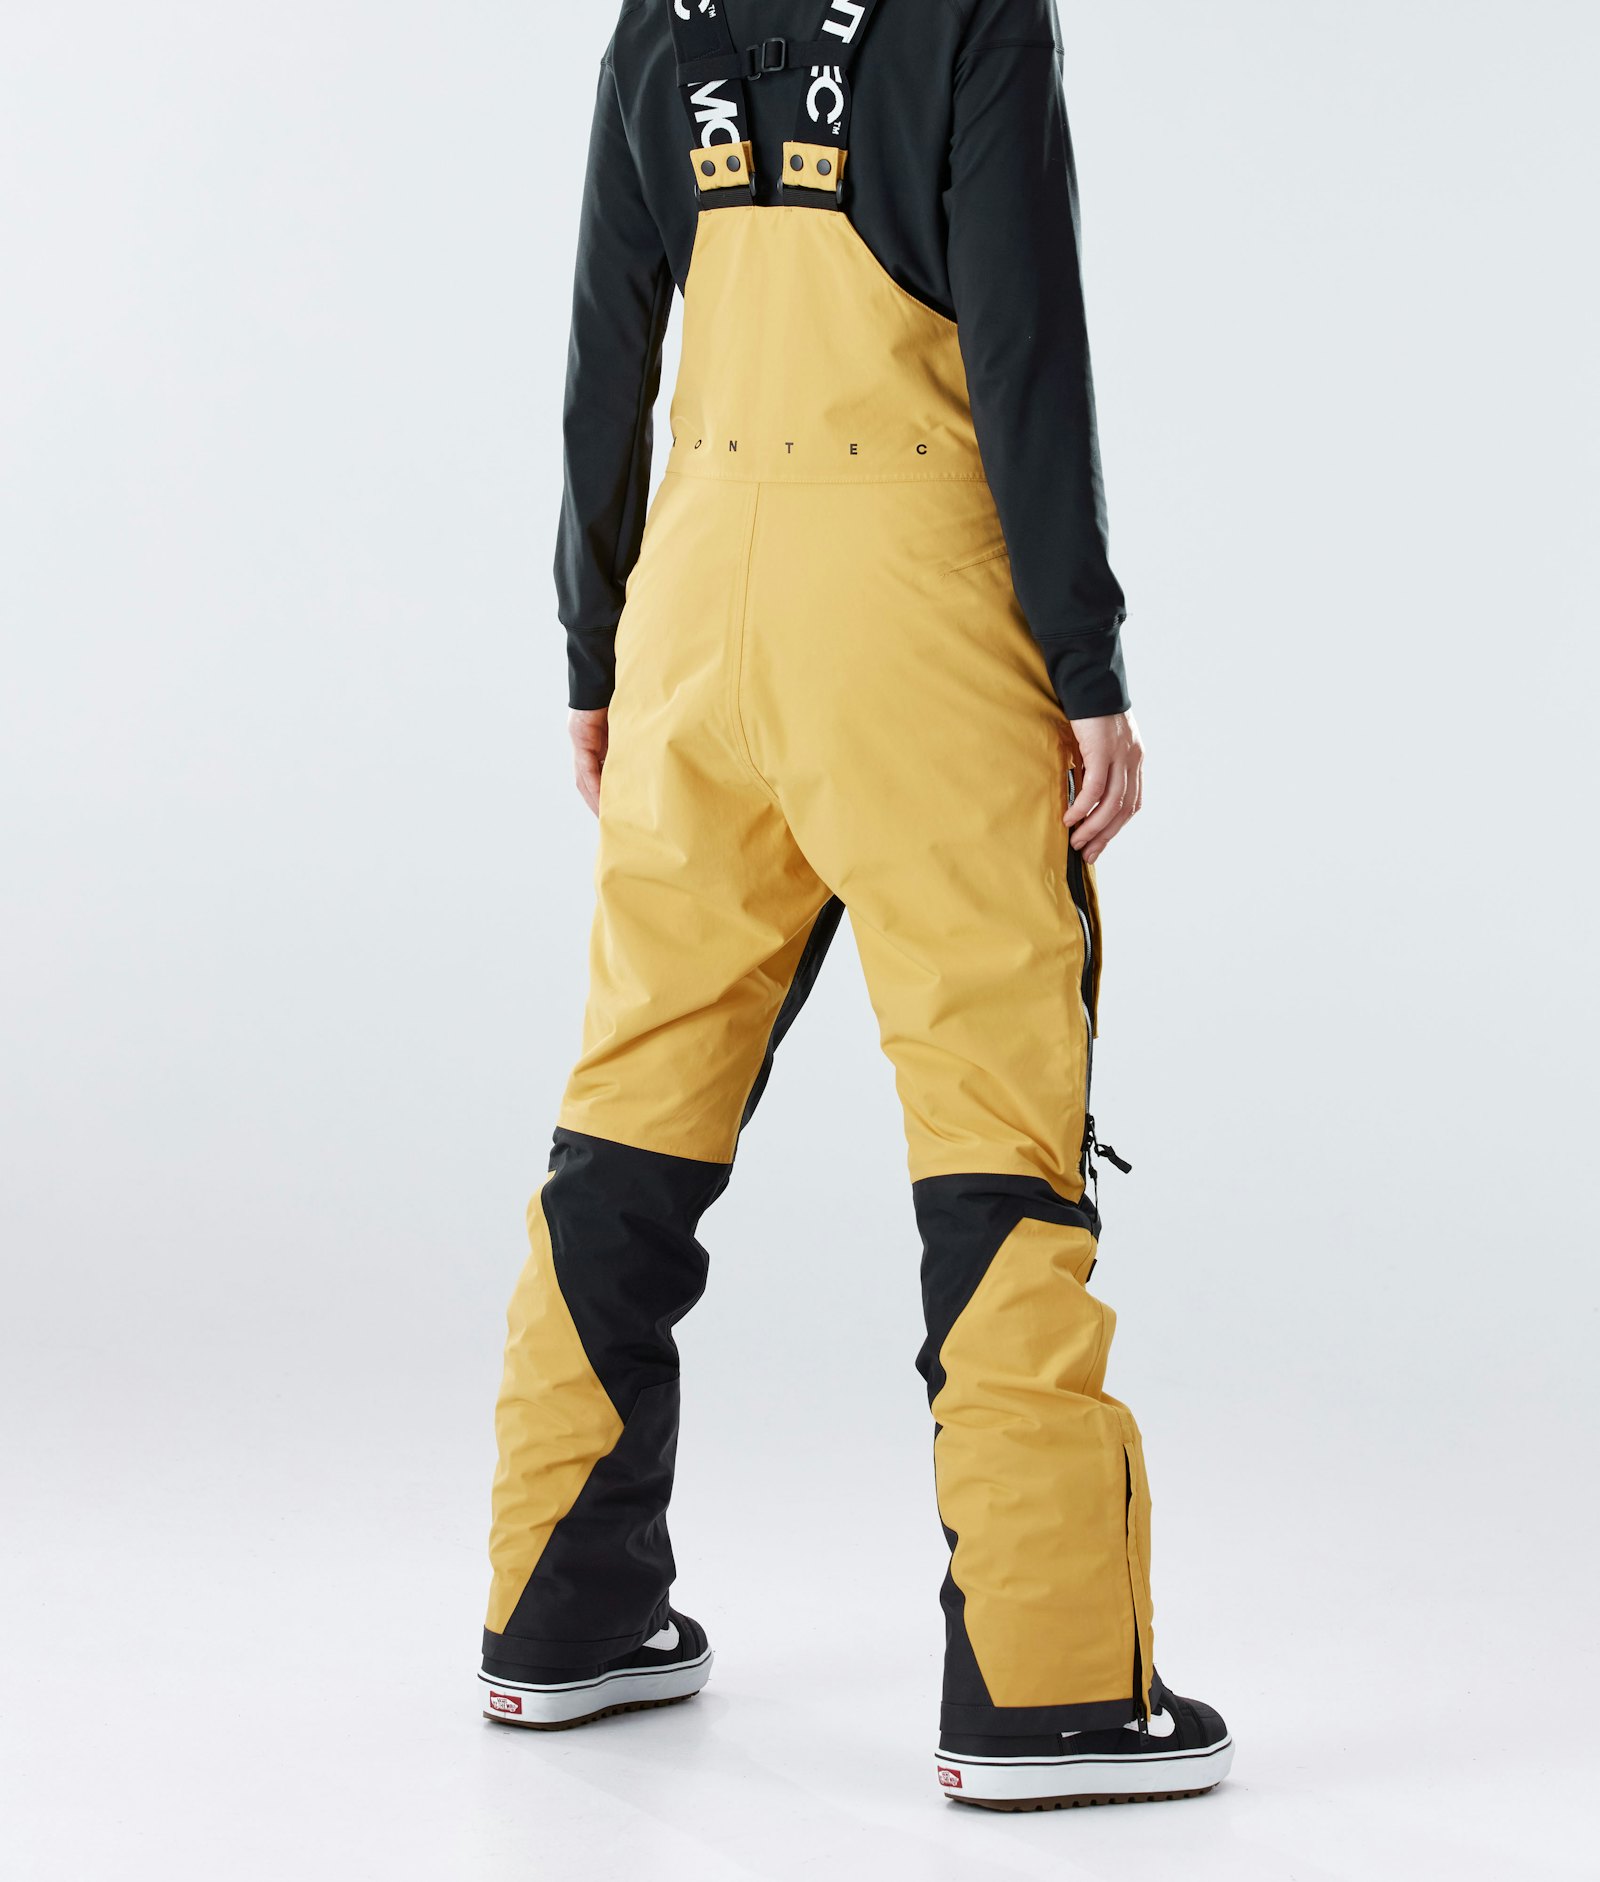 Montec Fawk W 2020 Pantalones Snowboard Mujer Yellow/Black